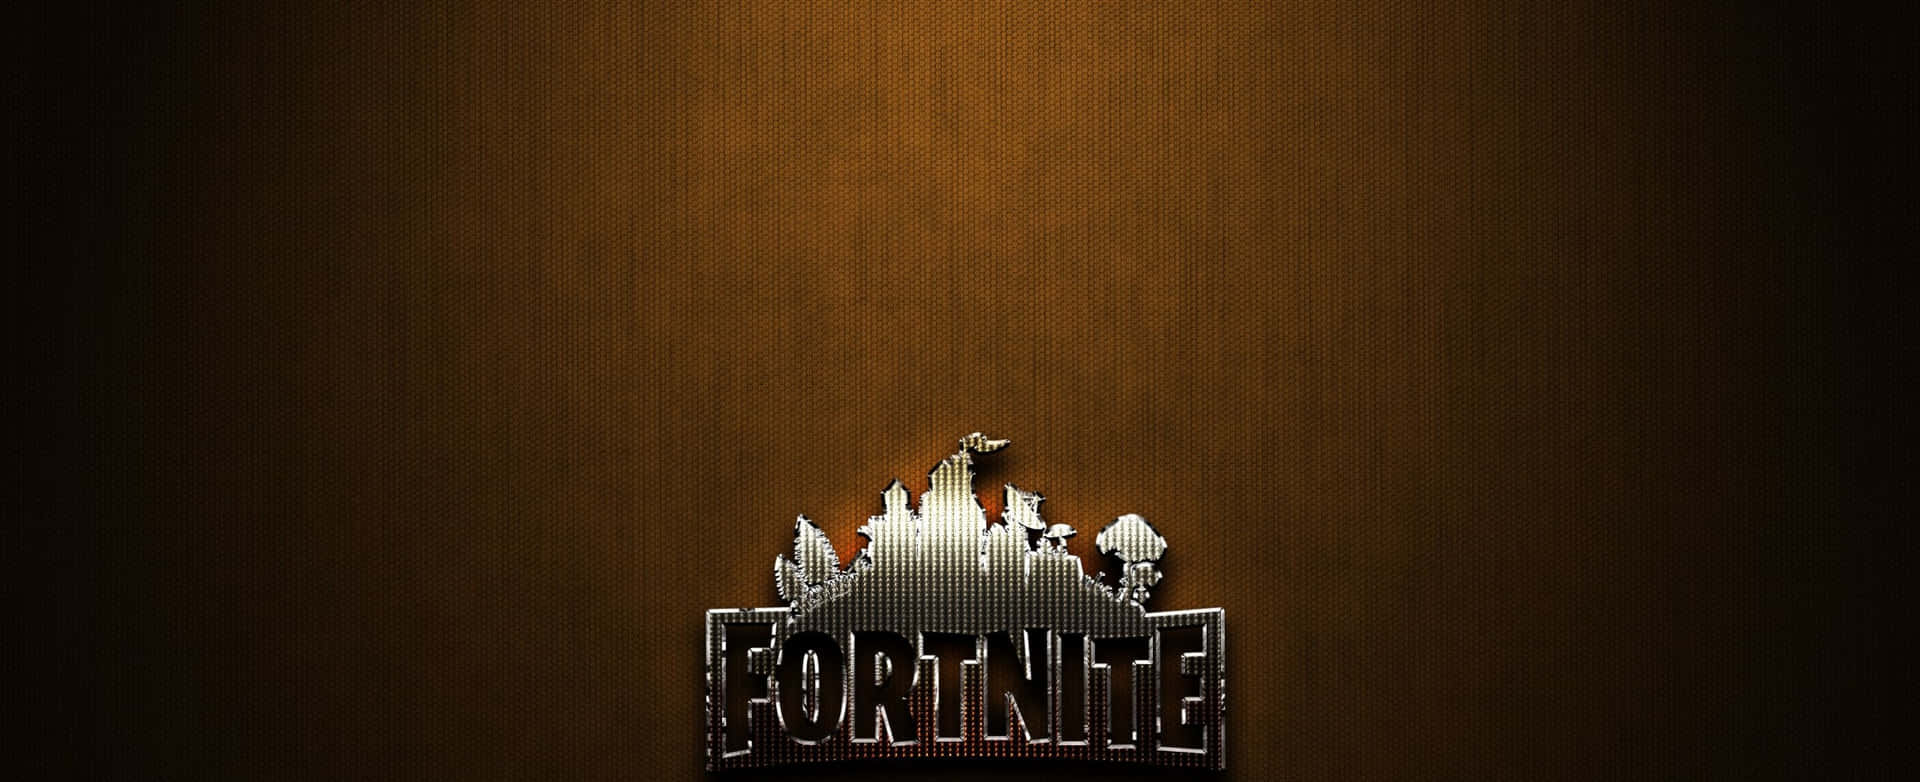 Cool Fortnite-logo 2560 X 1042 Wallpaper